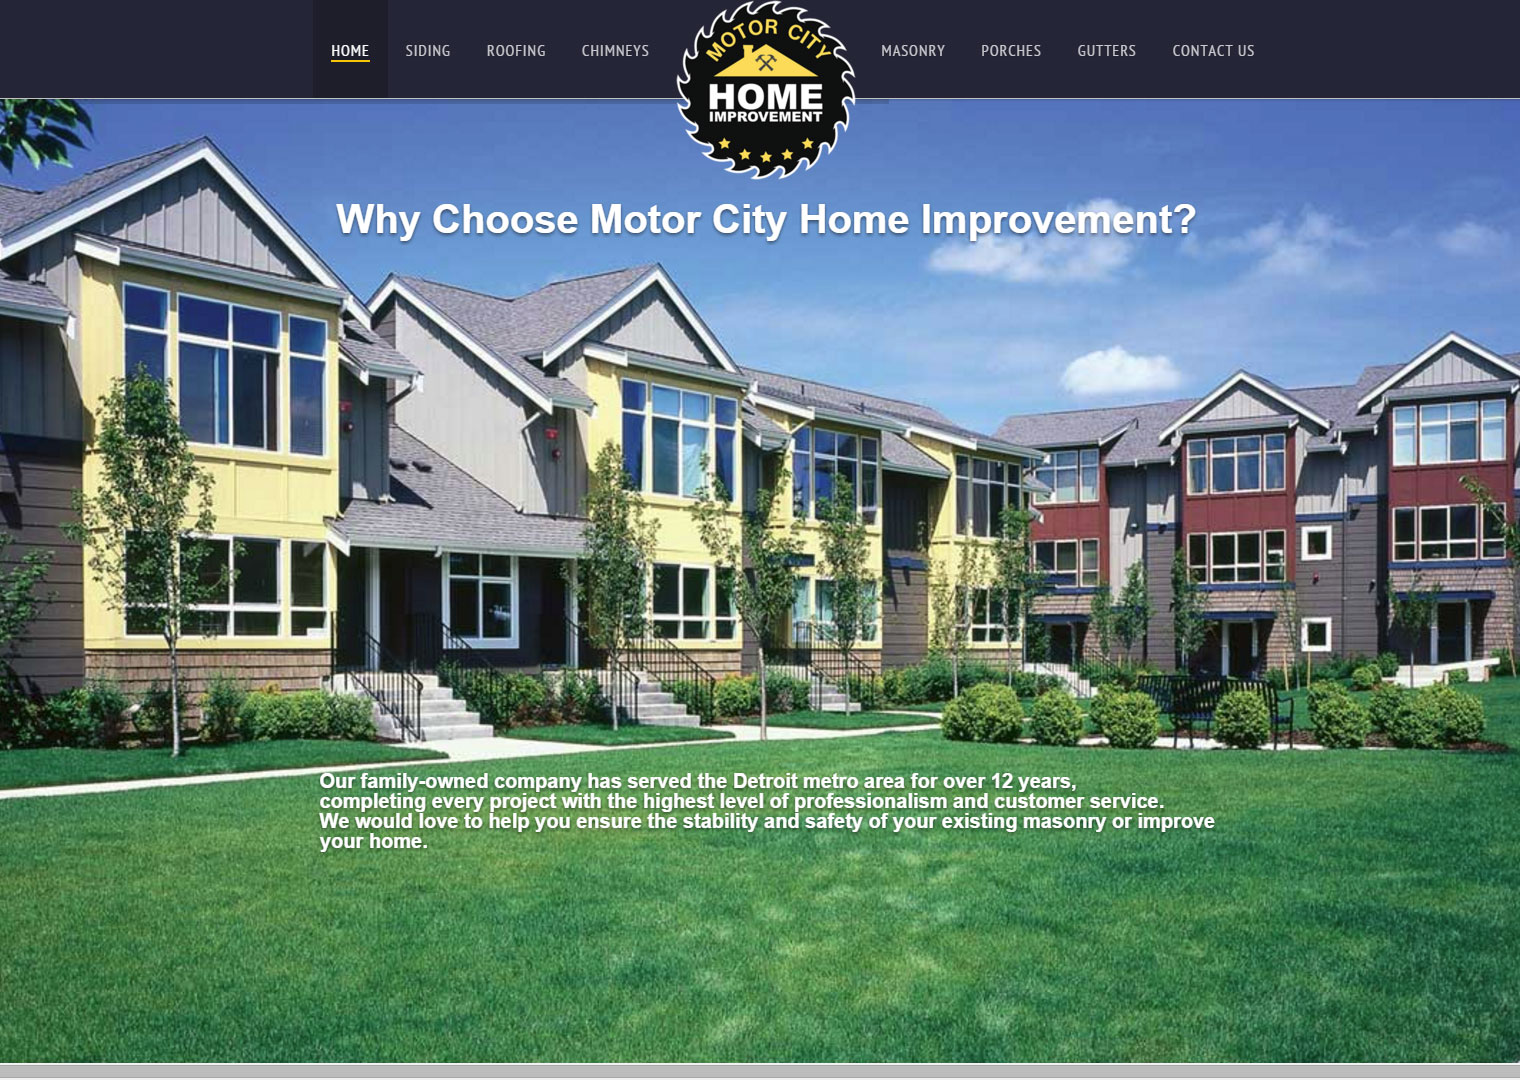 Motor City Home Improvement